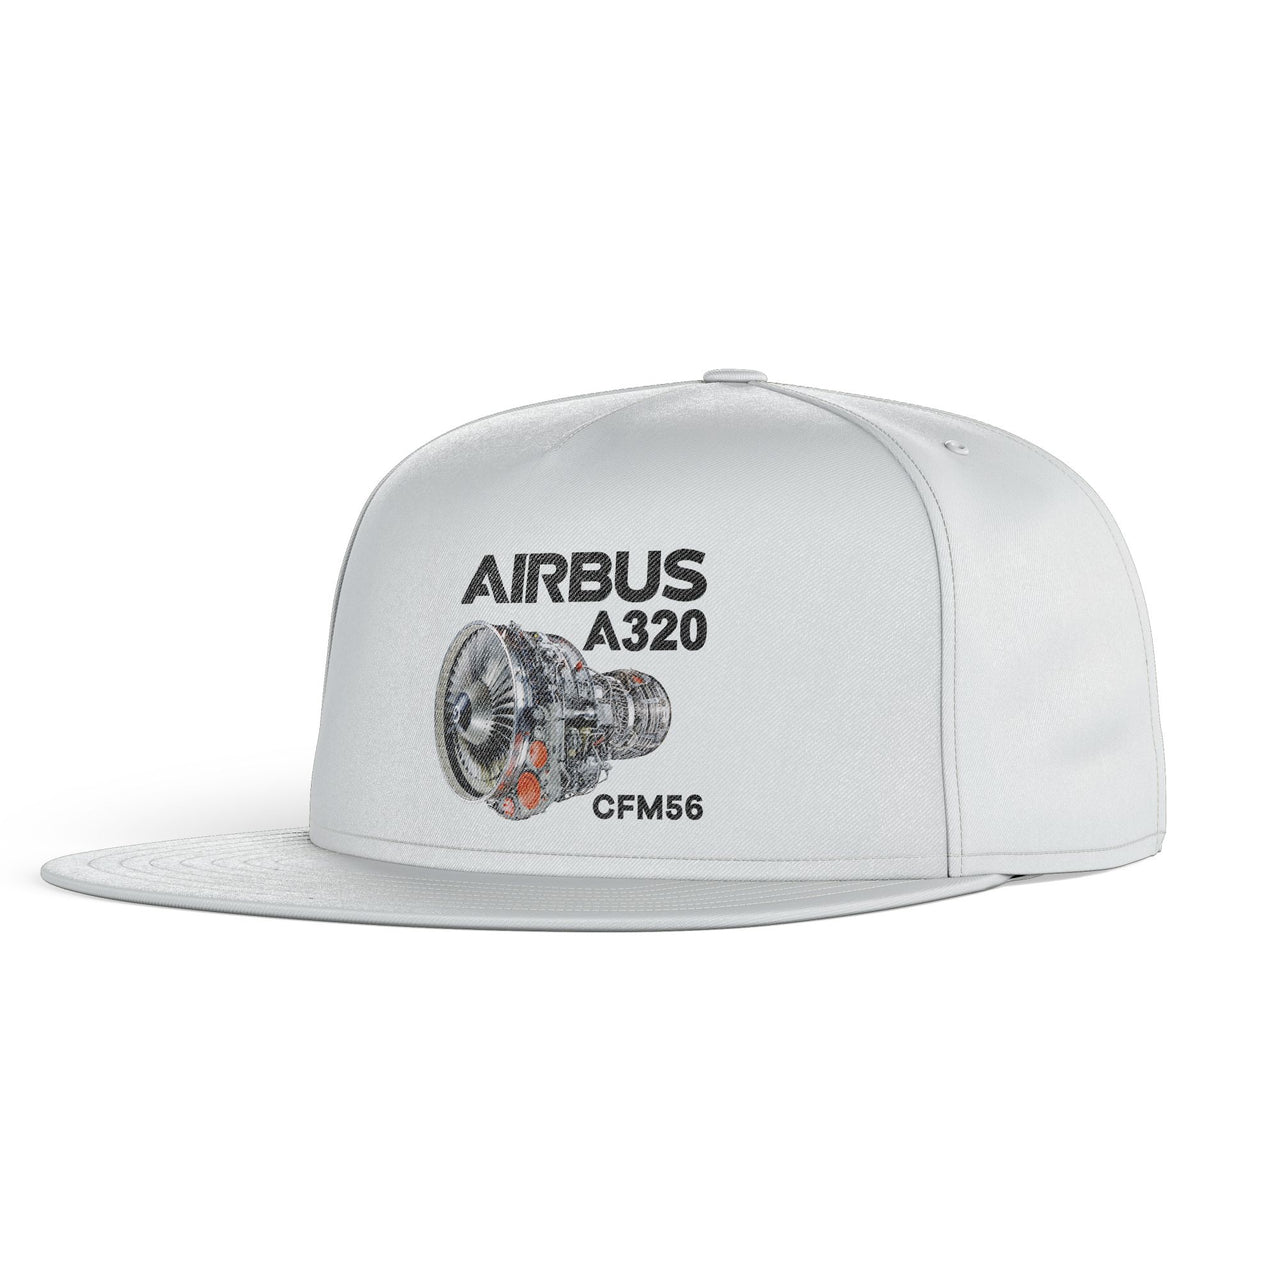 Airbus A320 & CFM56 Engine Designed Snapback Caps & Hats